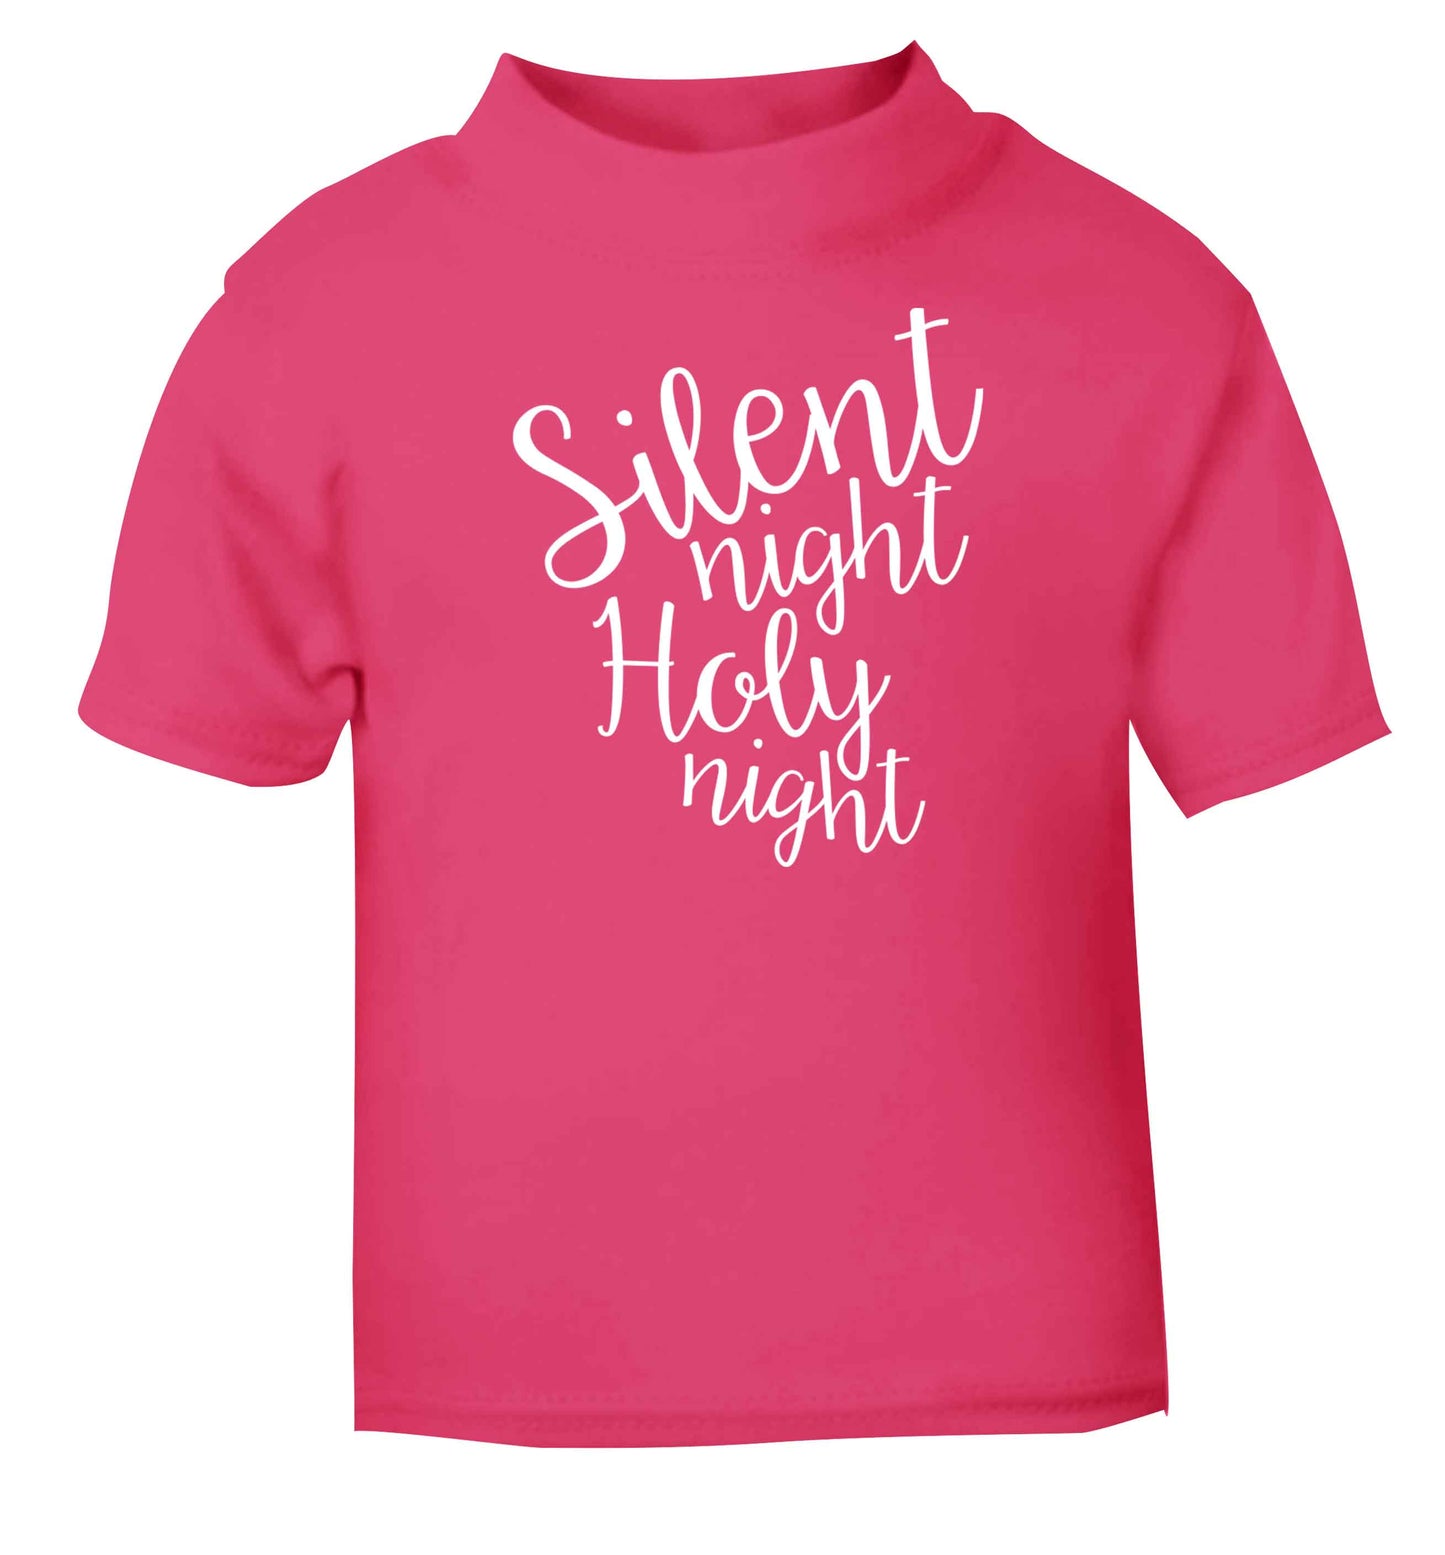 Silent night holy night pink baby toddler Tshirt 2 Years